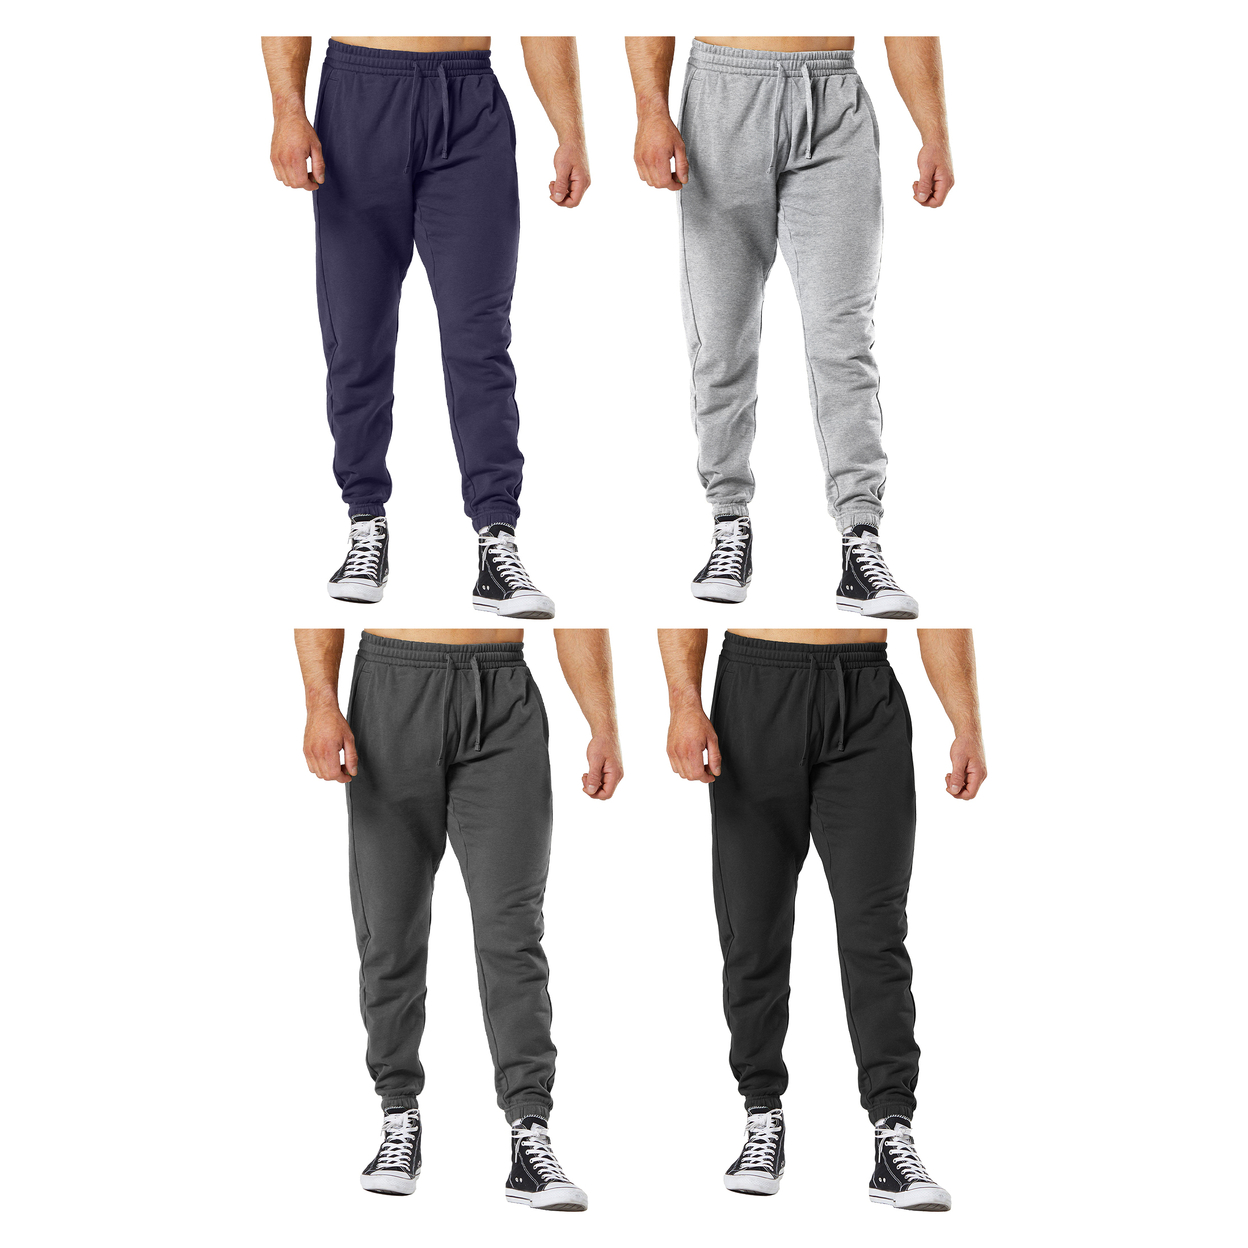 2-Pack: Men's Ultra-Soft Cozy Winter Warm Casual Fleece-Lined Sweatpants Jogger - Black & Grey, Xx-large